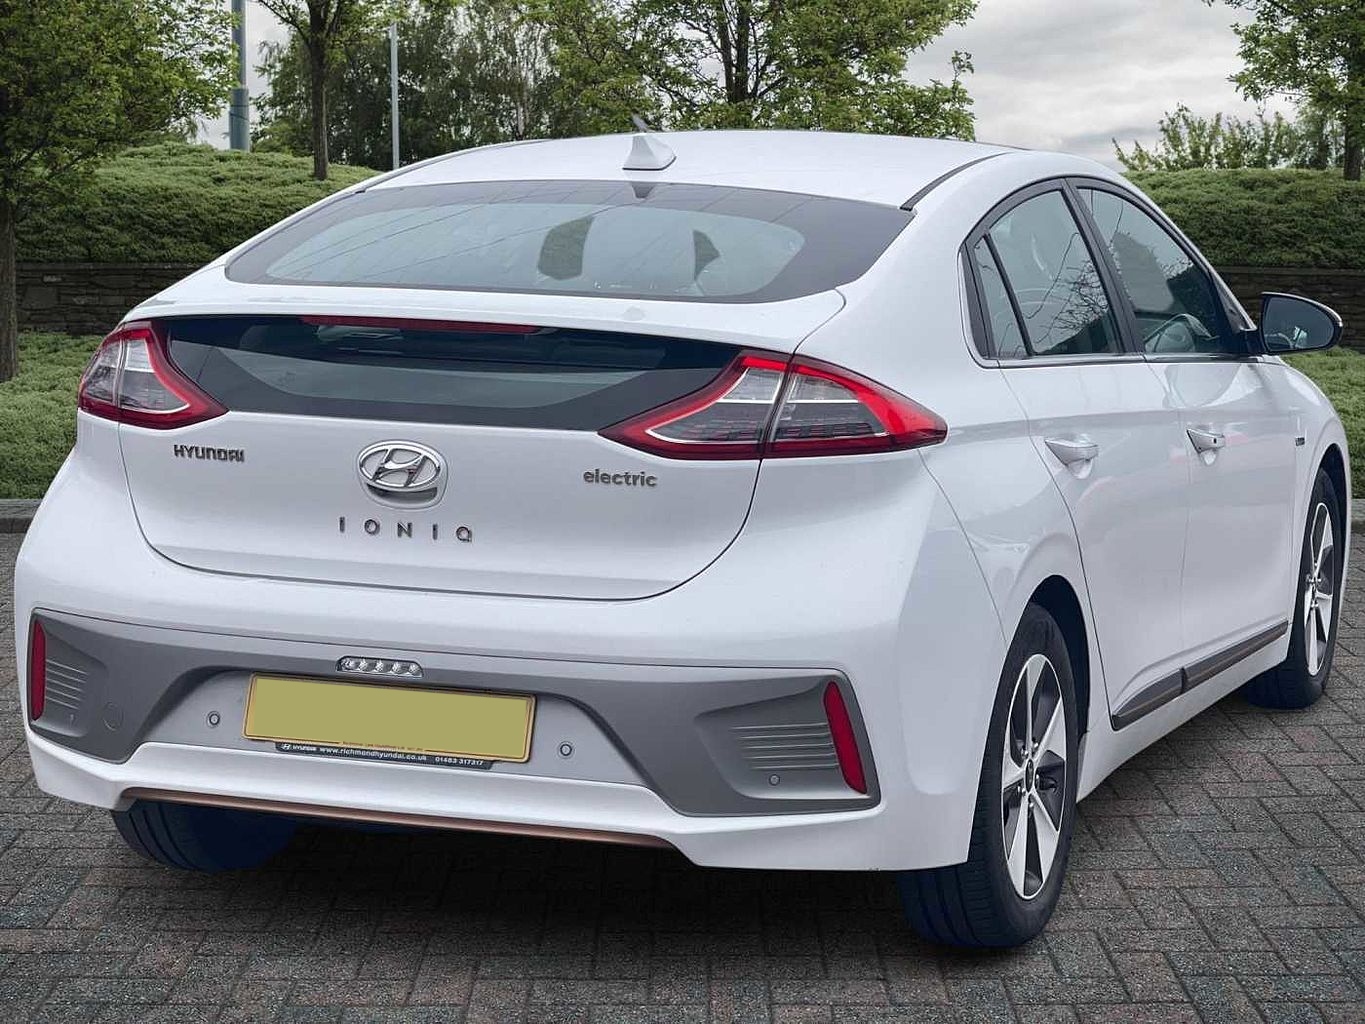 Hyundai IONIQ 2017 electric car owner review